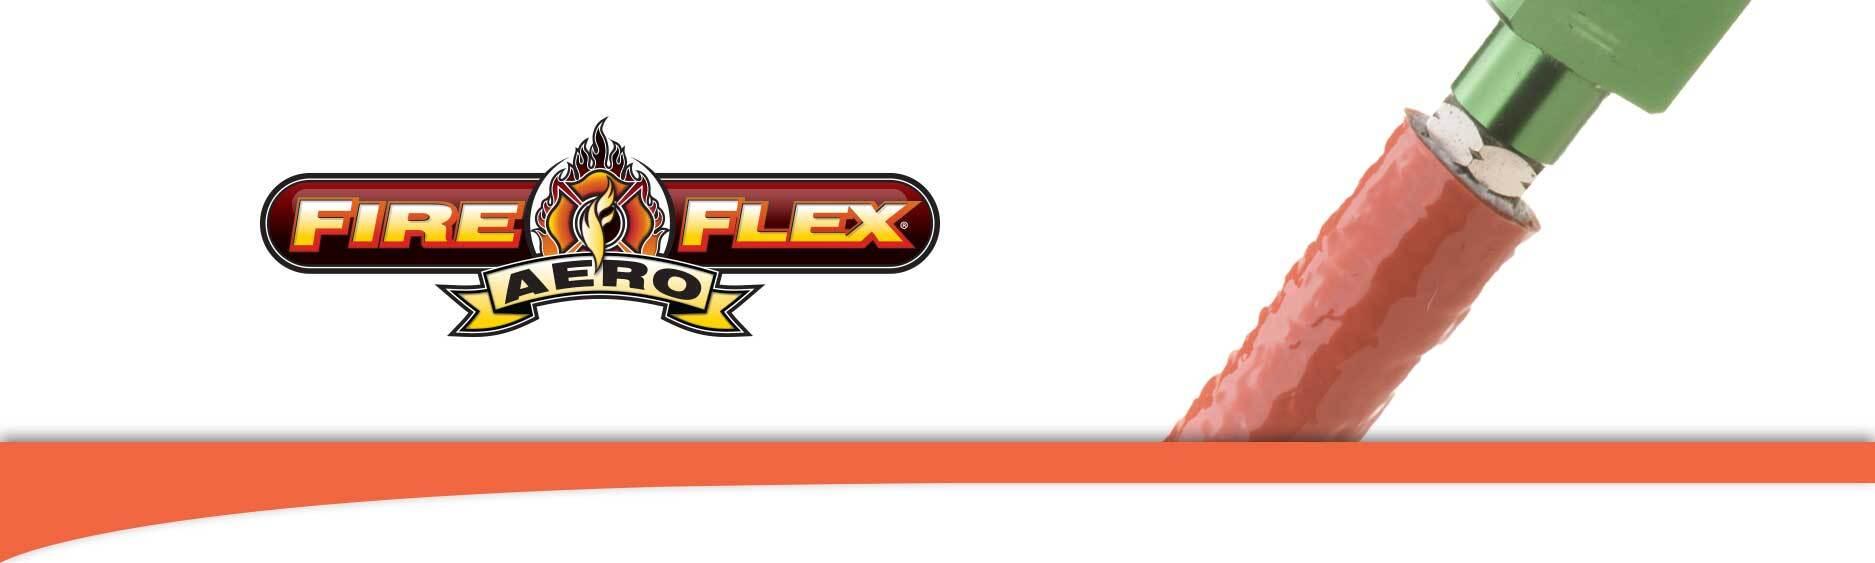 https://media.myshop.com/images/shop2658800.pictures.fireflex_aero-logo.jpg